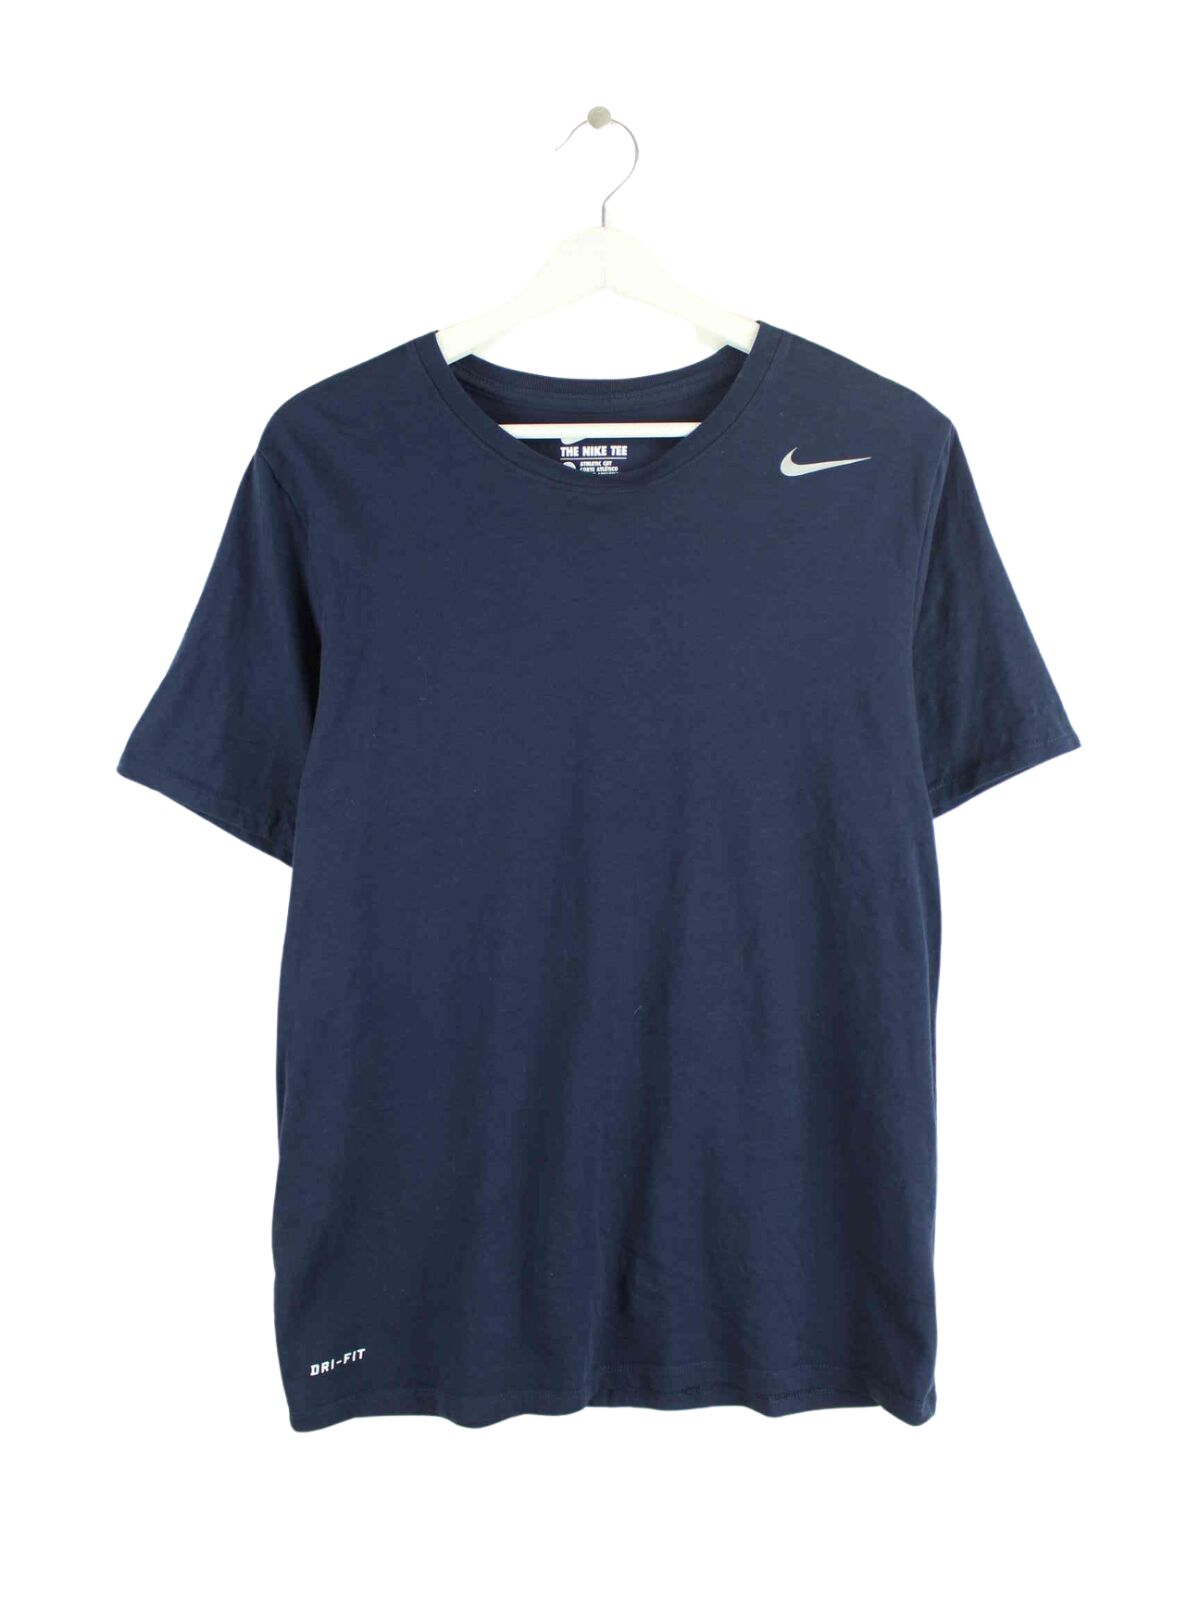 Nike Dri Fit Swoosh Print T-Shirt Blau M (front image)